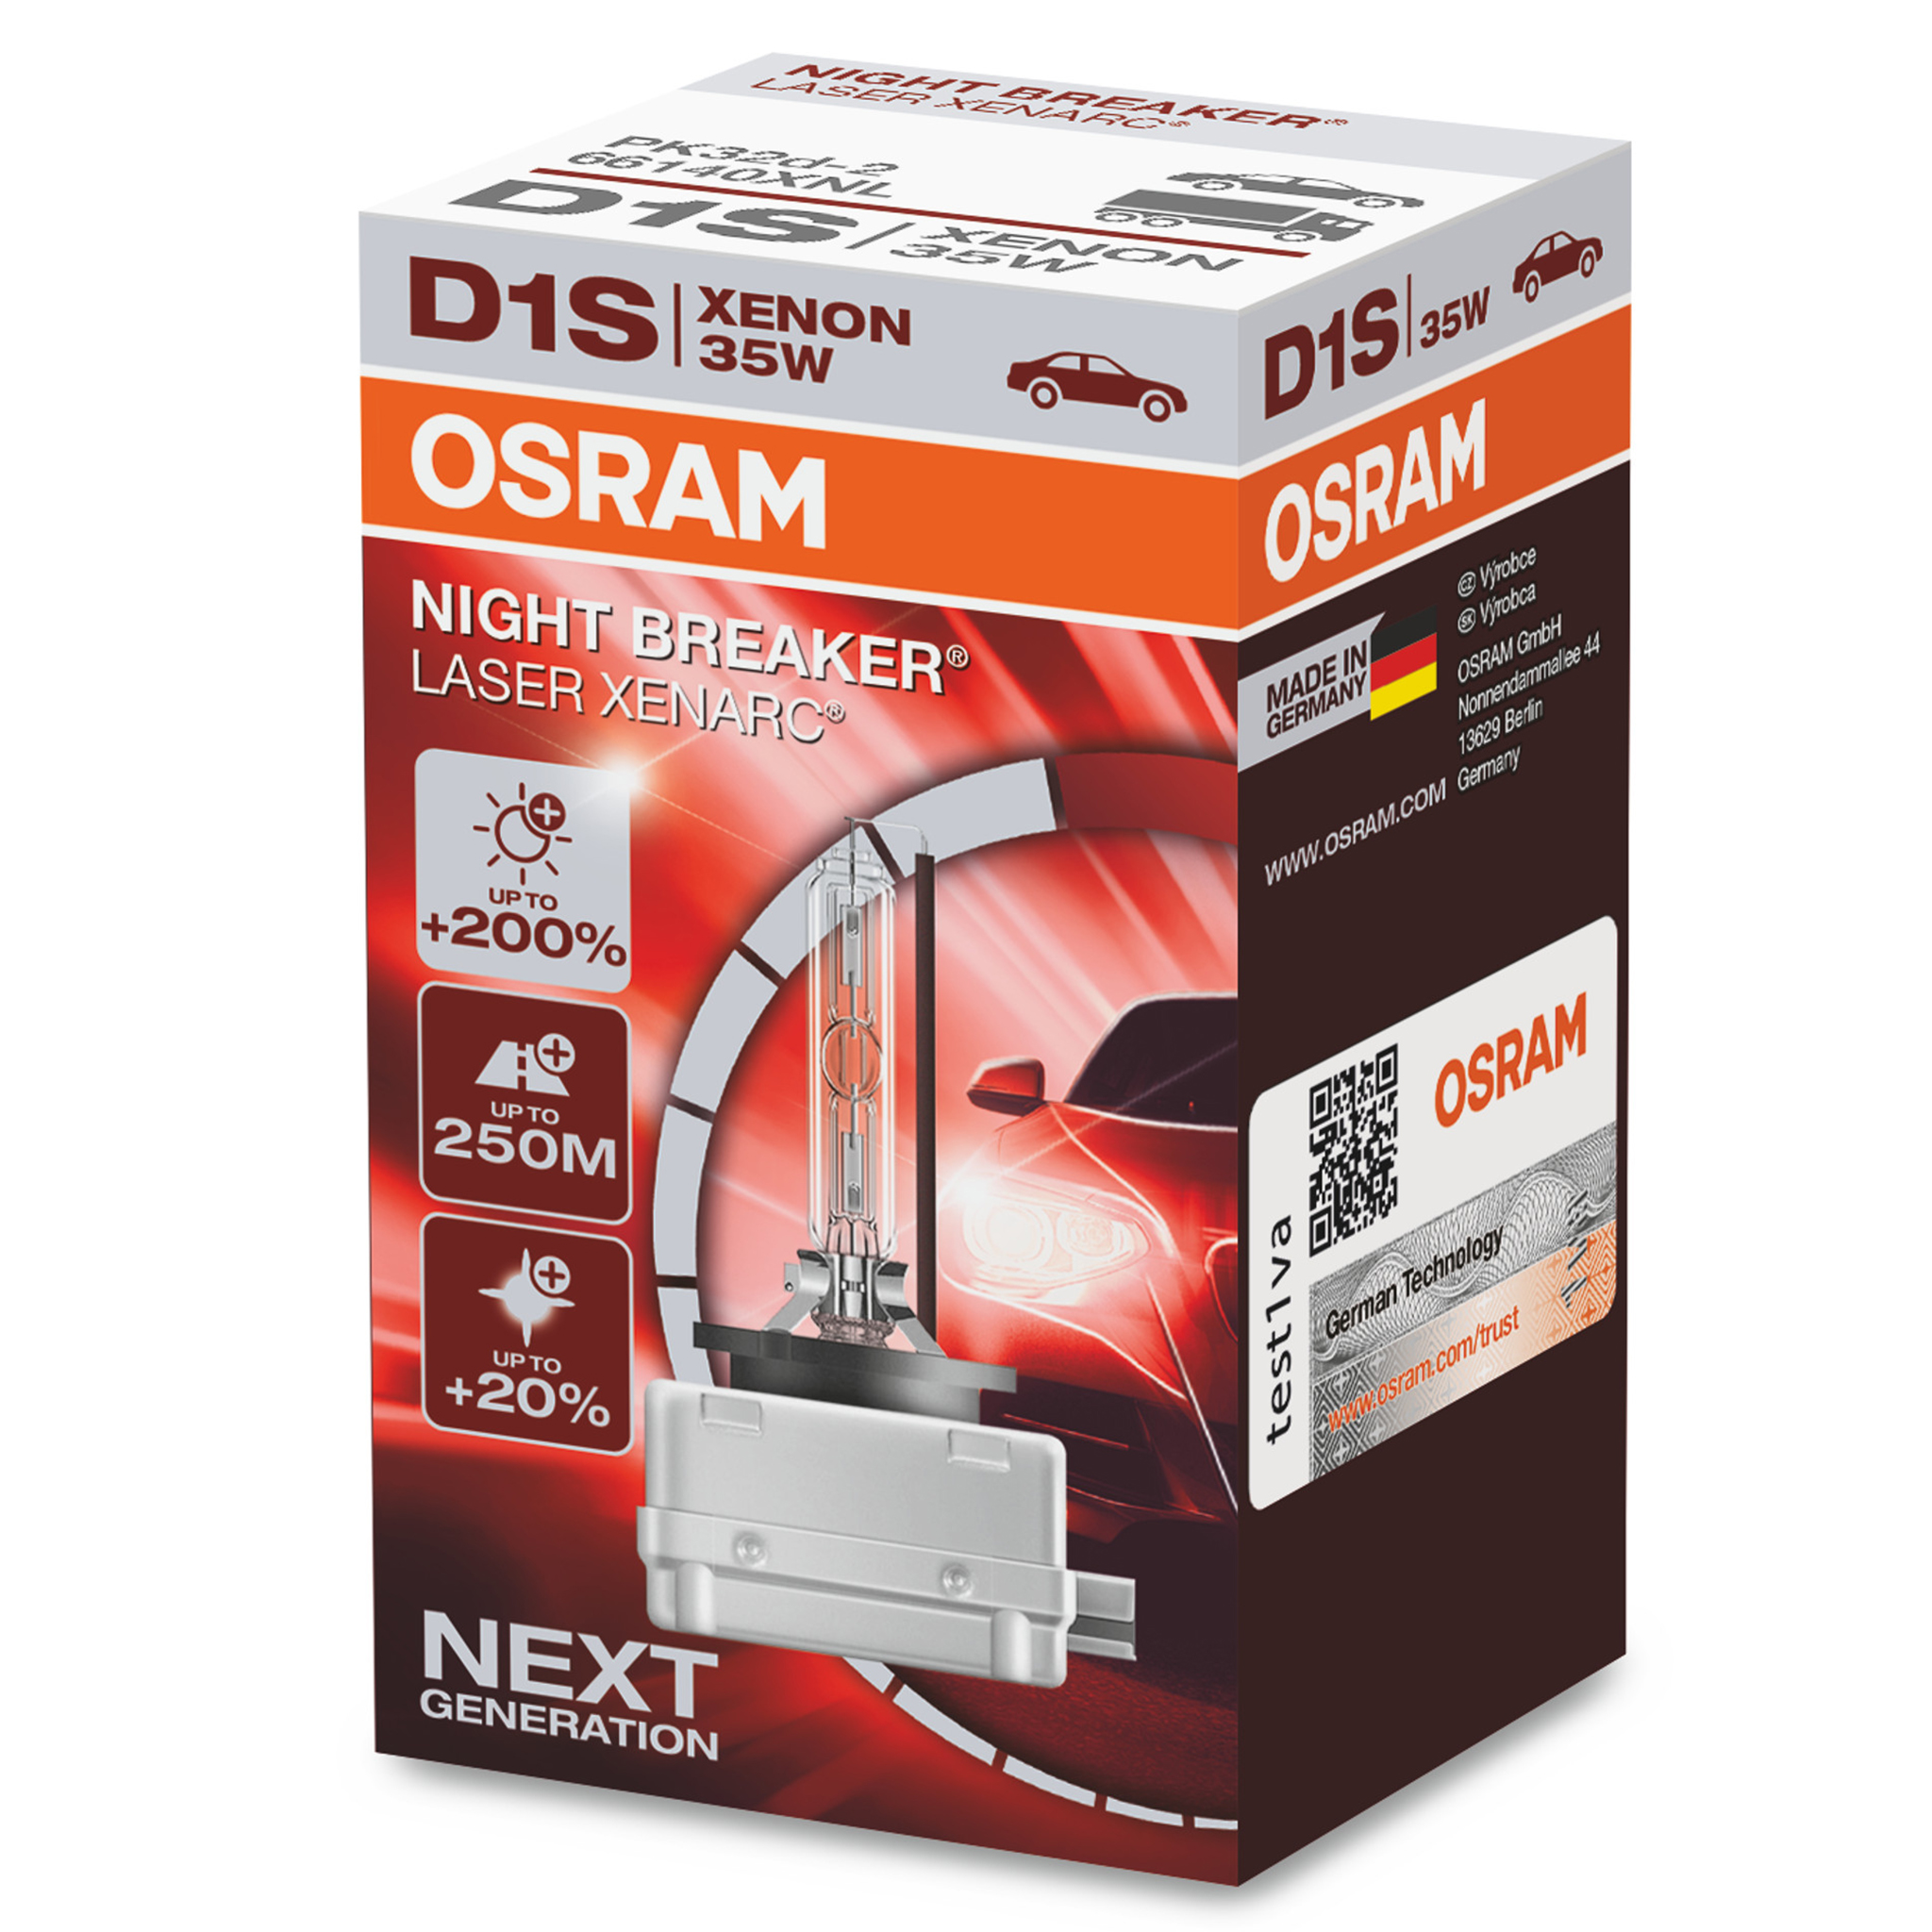 Osram Xenarc D1S Night Breaker Laser, Xenonpære, 35W, 1 stk.